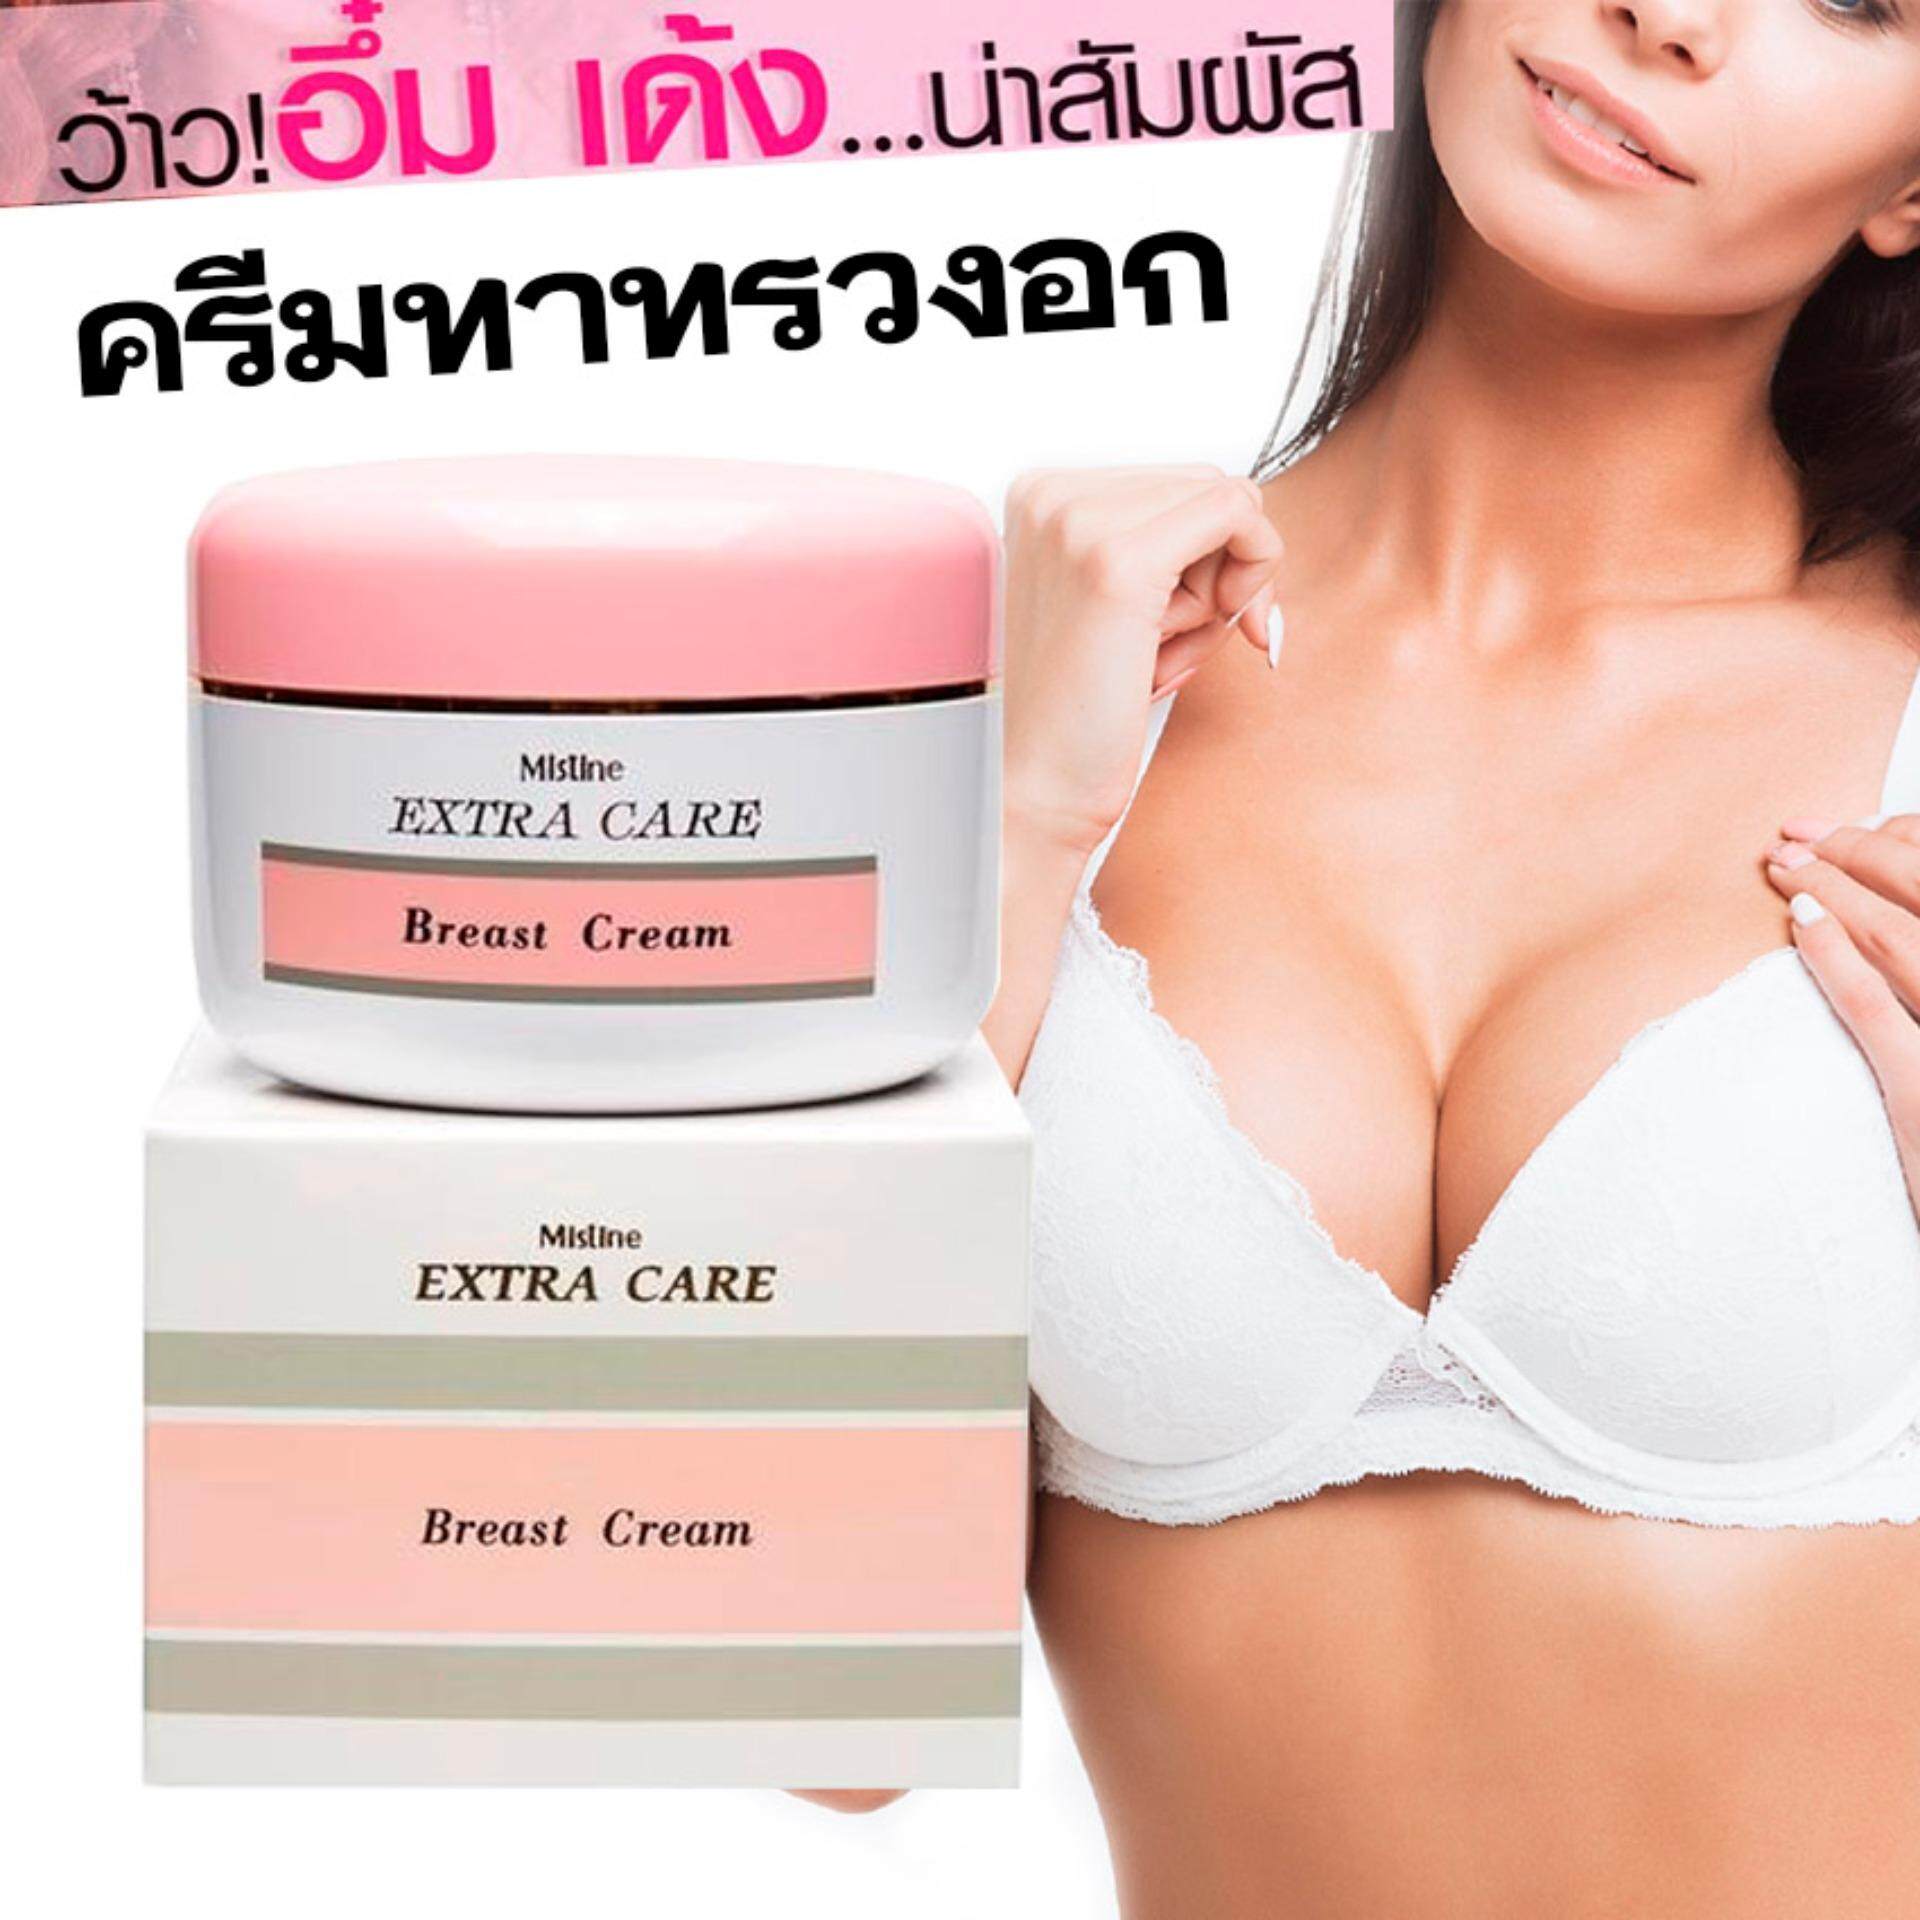 Mistine Extra Care Breast Cream 100g. มิสทิน เอ็กซ์ตร้า แคร์ เบรสท์ ครีม ครีมบำรุงทรวงอก ครีมกระชับทรวงอก ครีมนวดหน้าอก Beauty Store